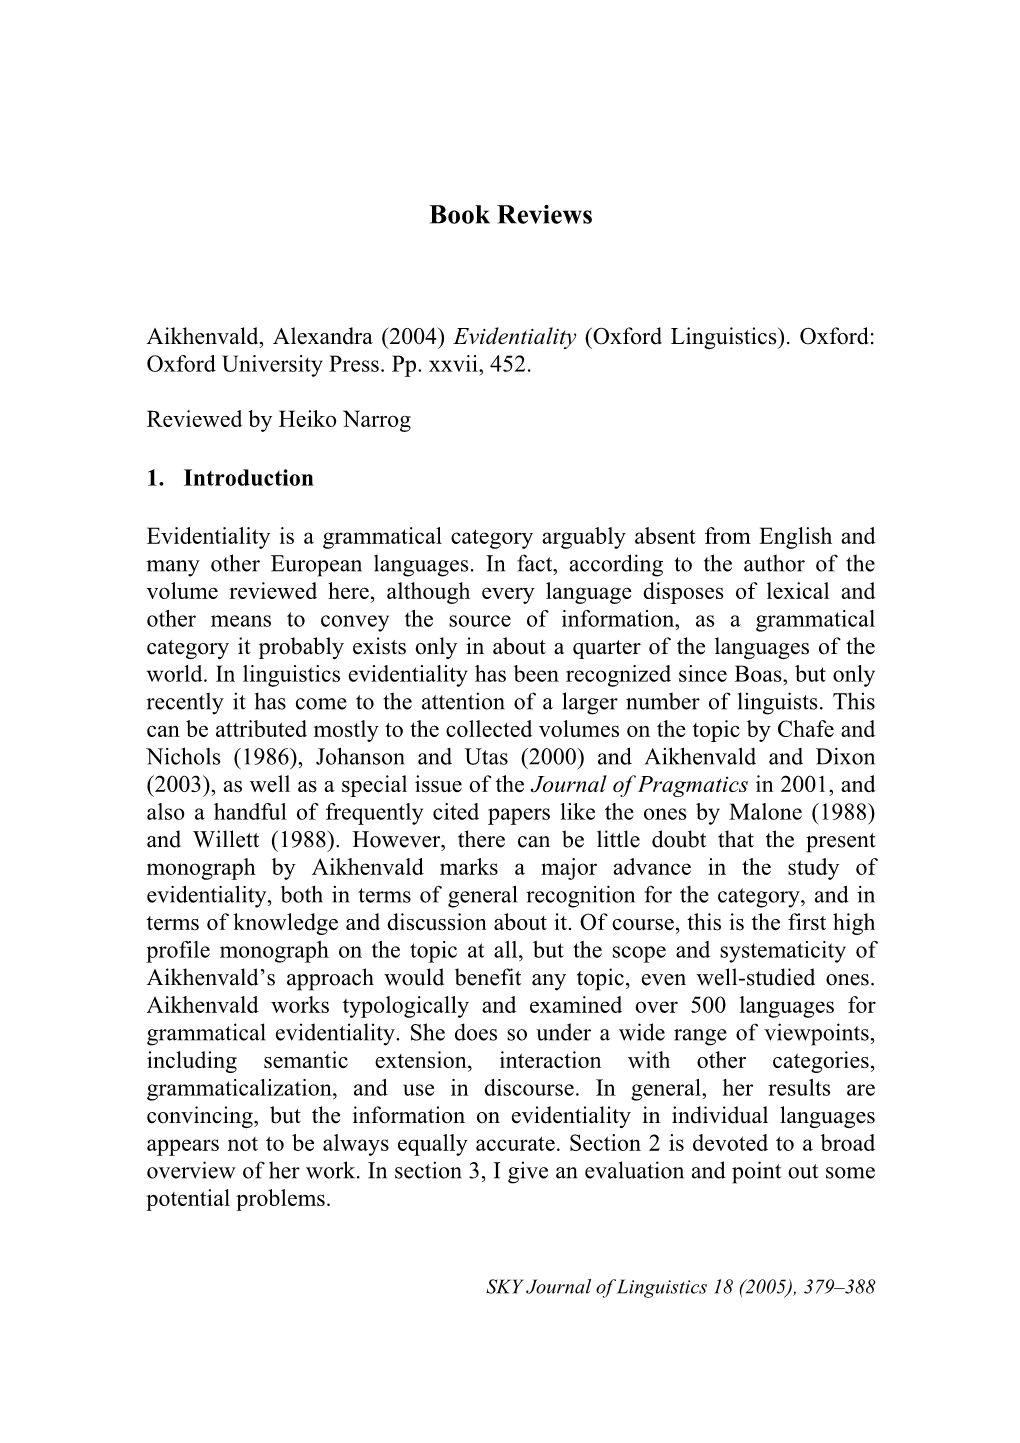 Aikhenvald, Alexandra (2004) Evidentiality (Oxford Linguistics)